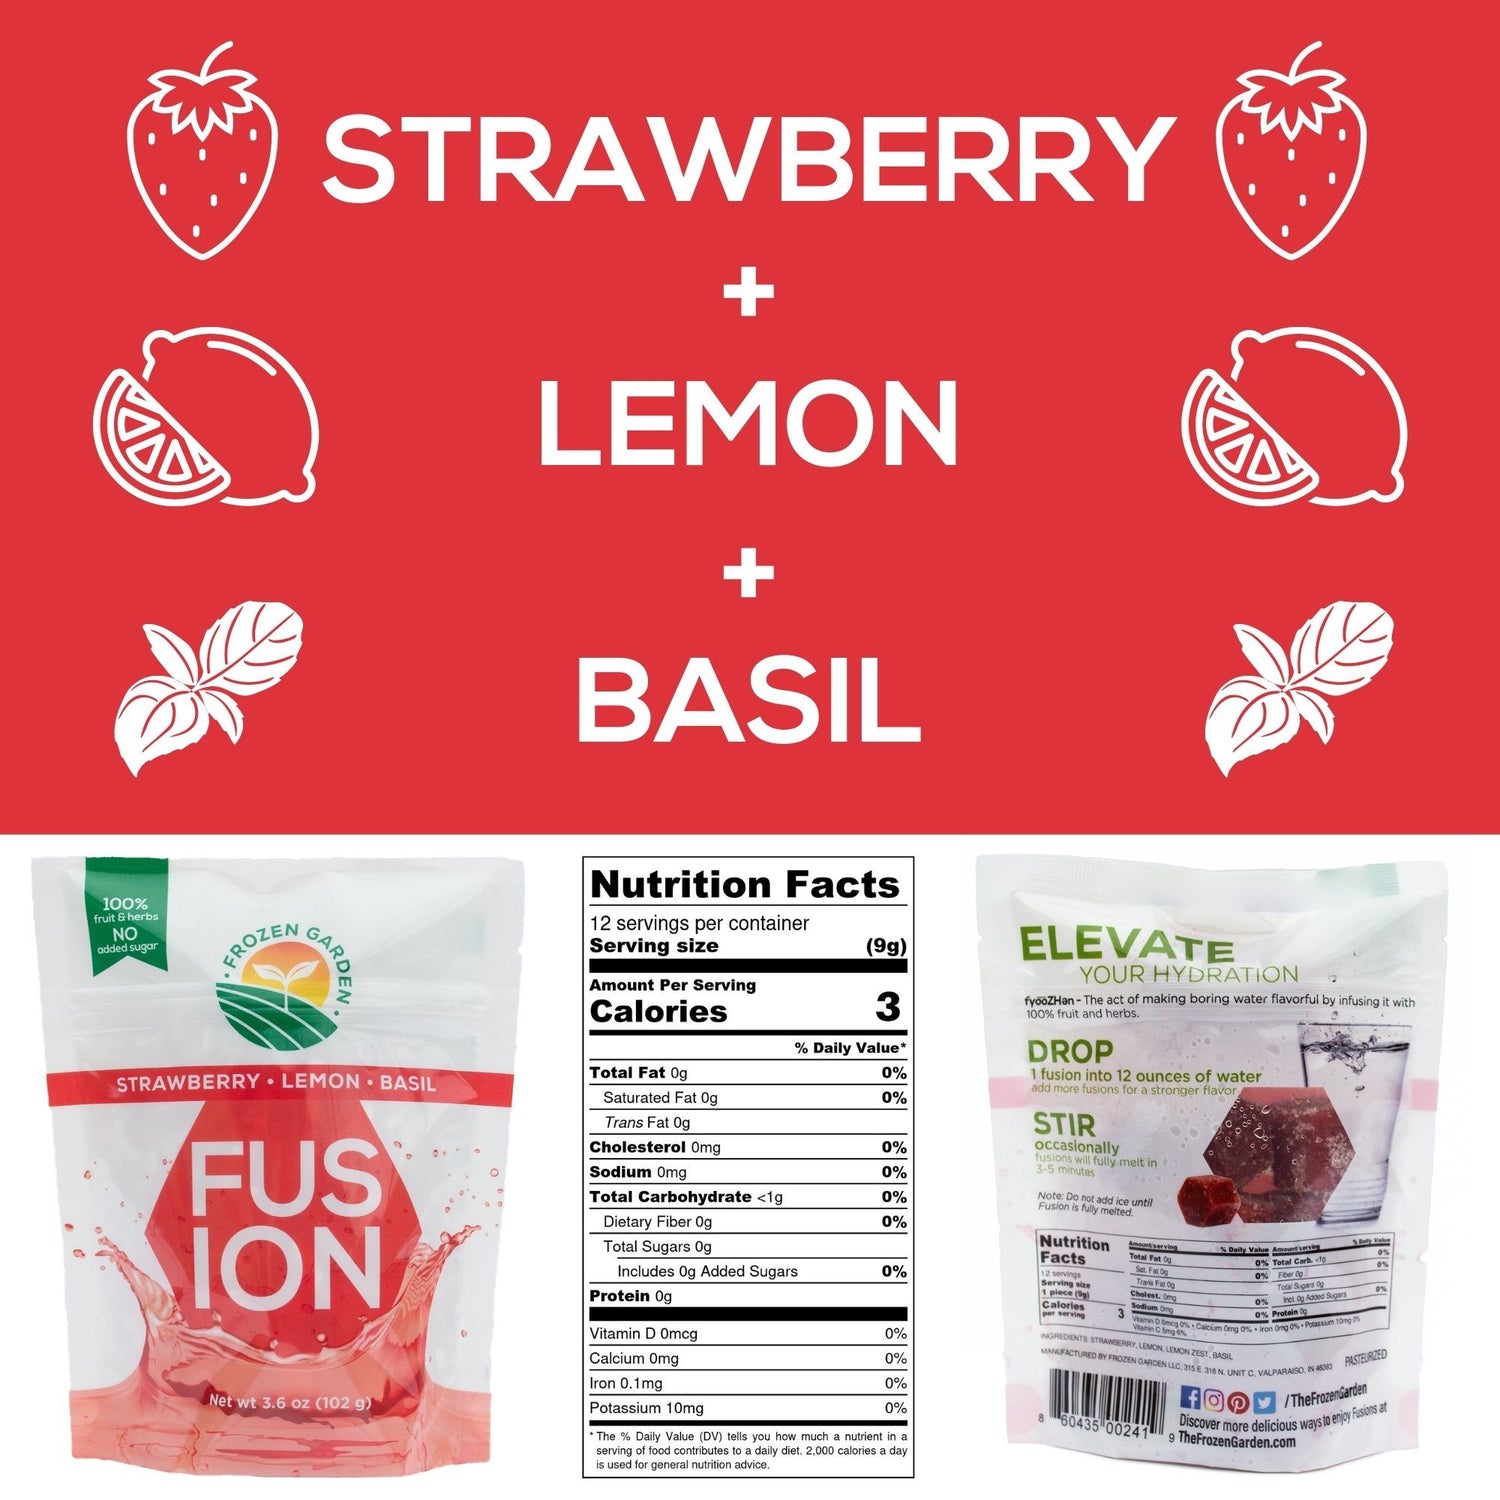 Strawberry + Lemon + Basil